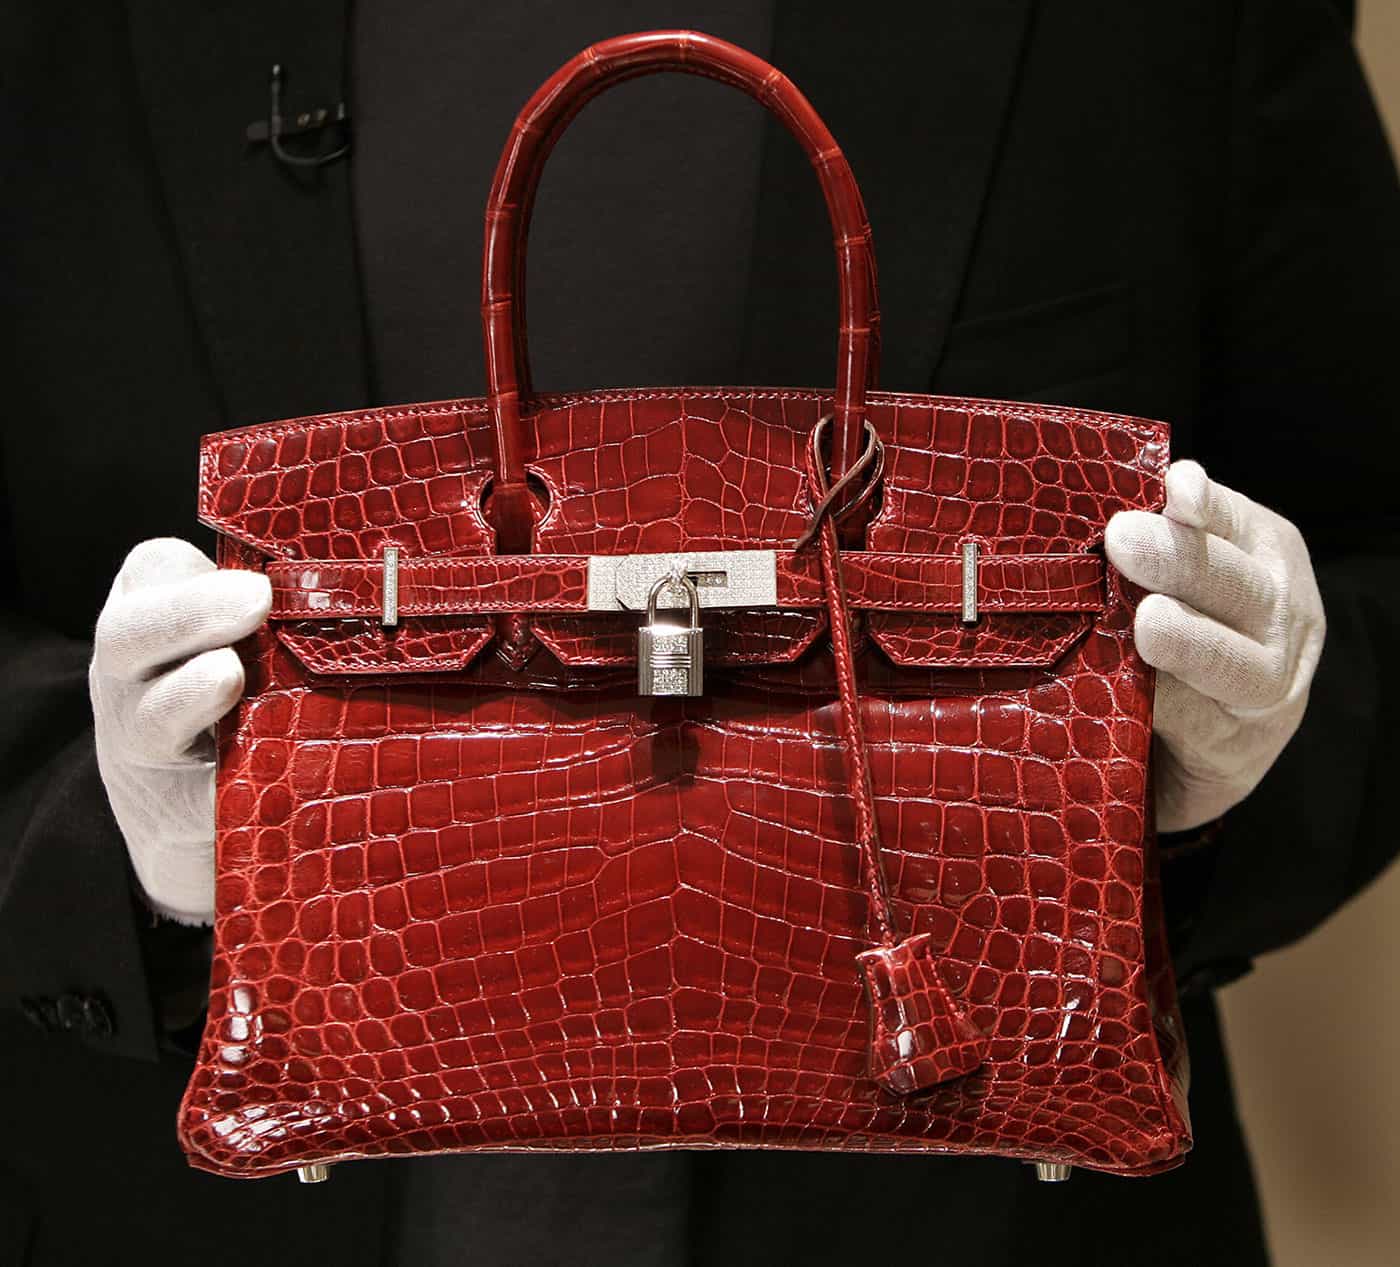 The Hermes Birkin Bag Dupes: Same Style, Less Money